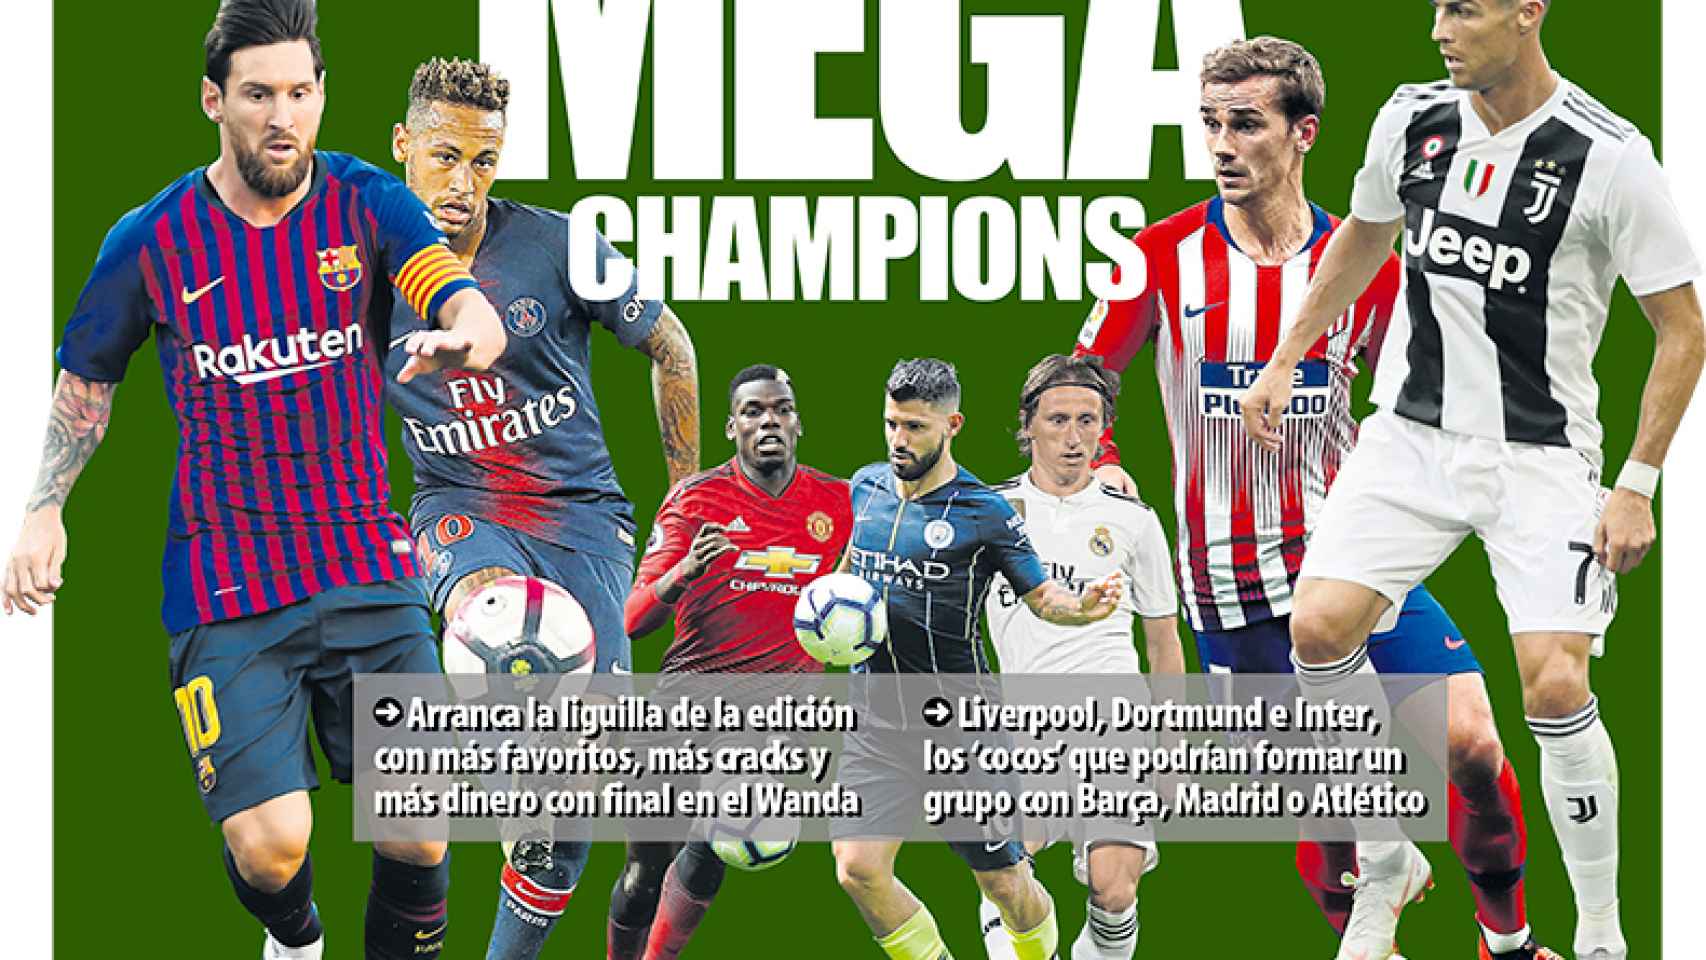 La portada del diario Mundo Deportivo (30/08/2018)1706 x 960